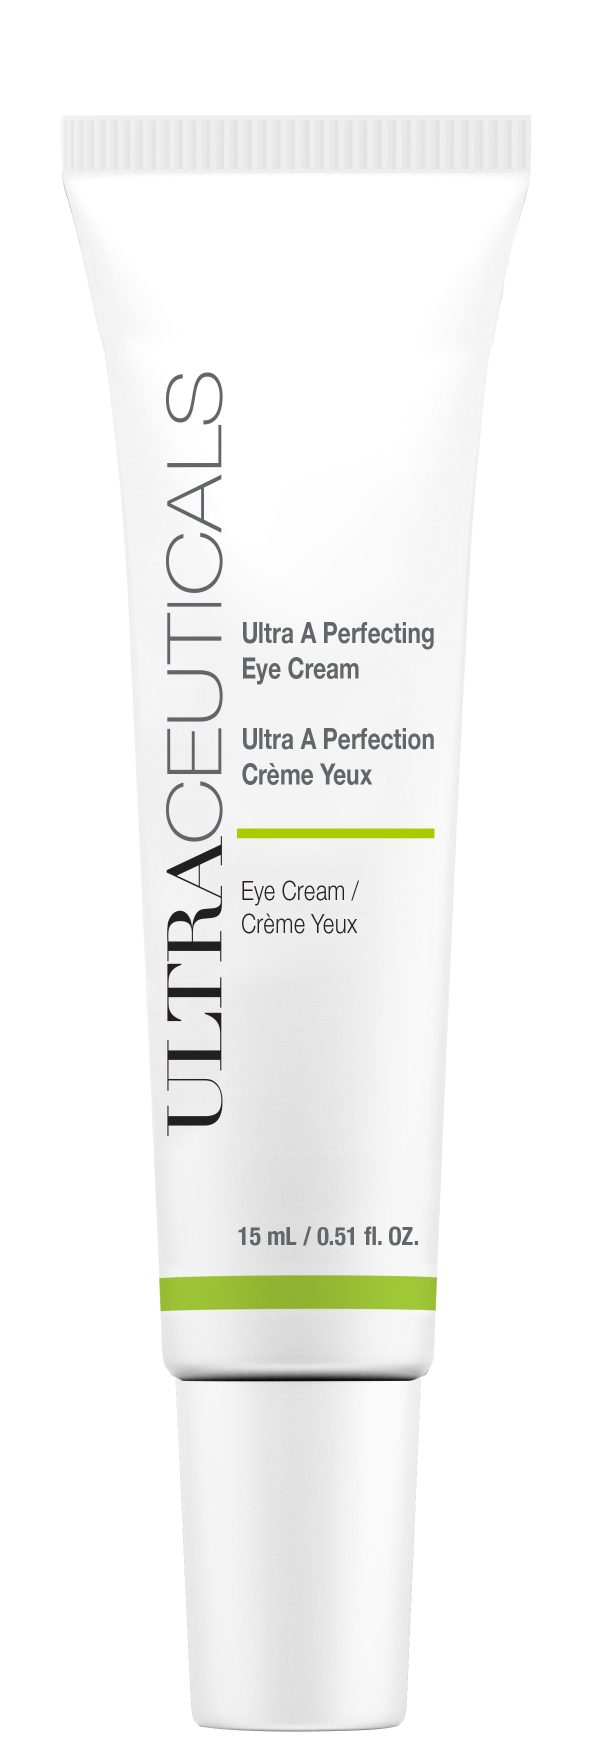 Ultra A Perfecting Eye Cream / Ультра А крем для кожи вокруг глаз "Совершенство кожи" 15 мл